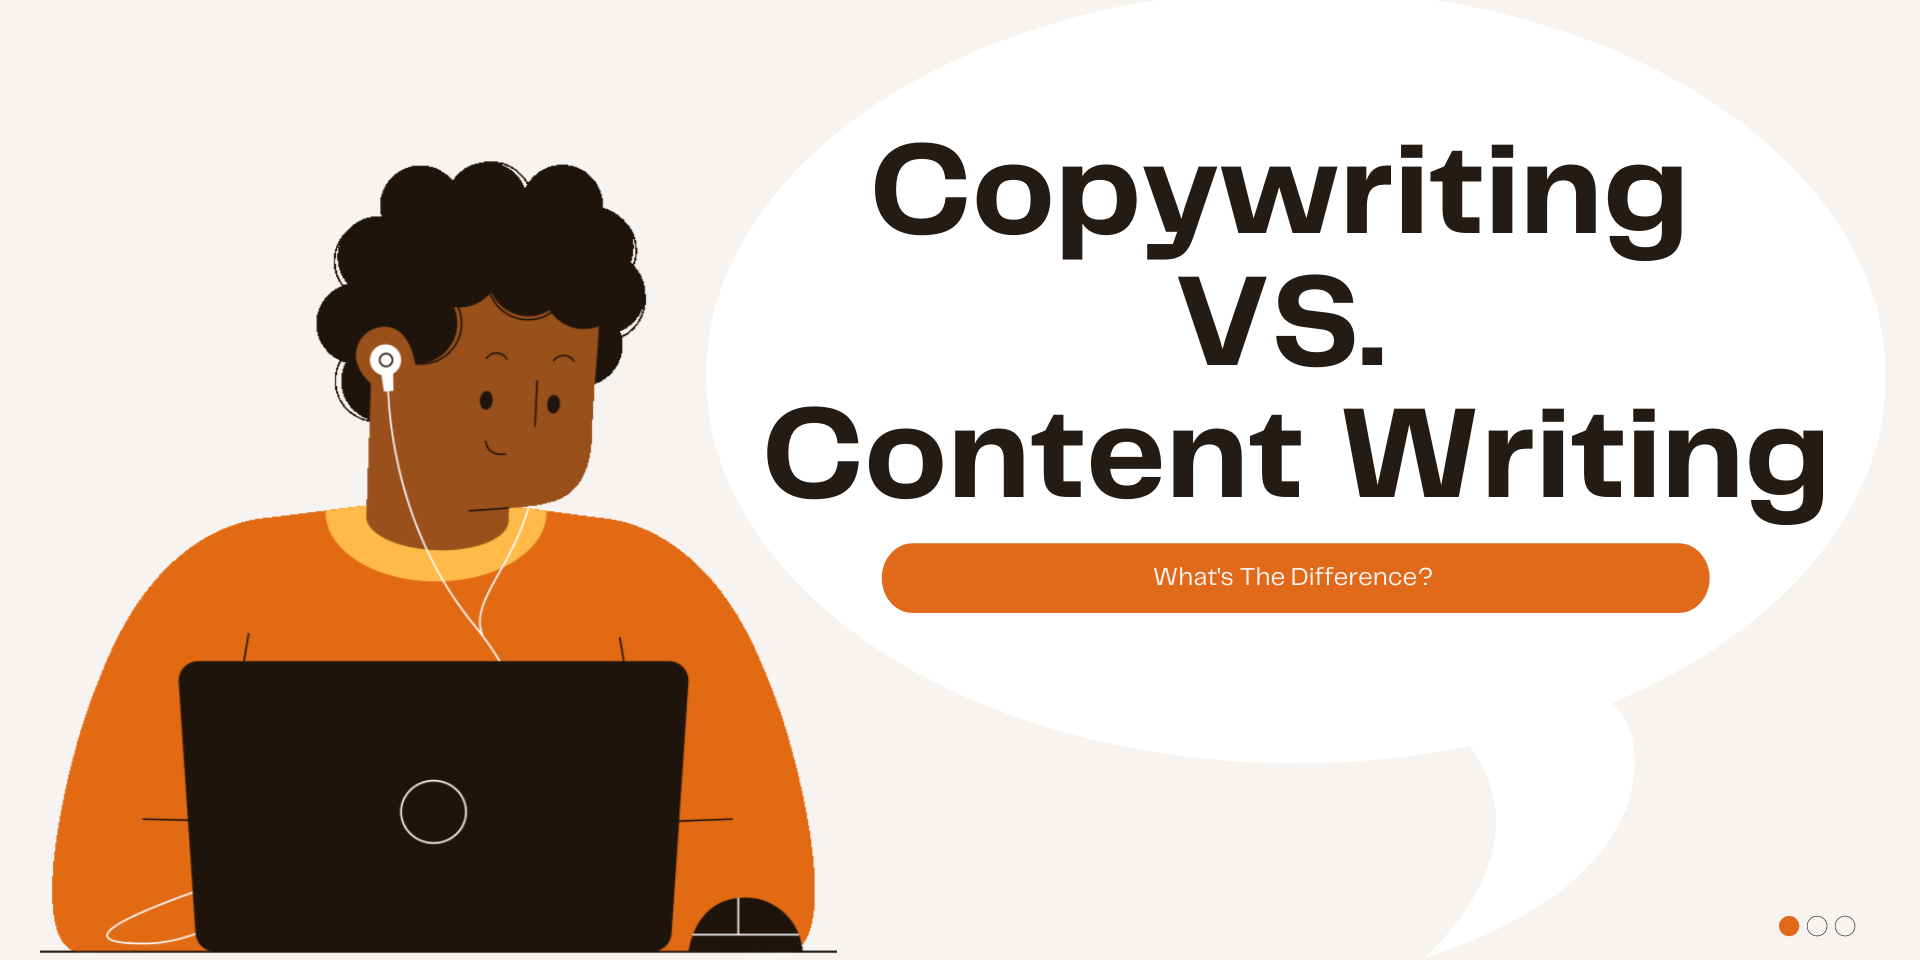 Copywriting VS content writing cover image